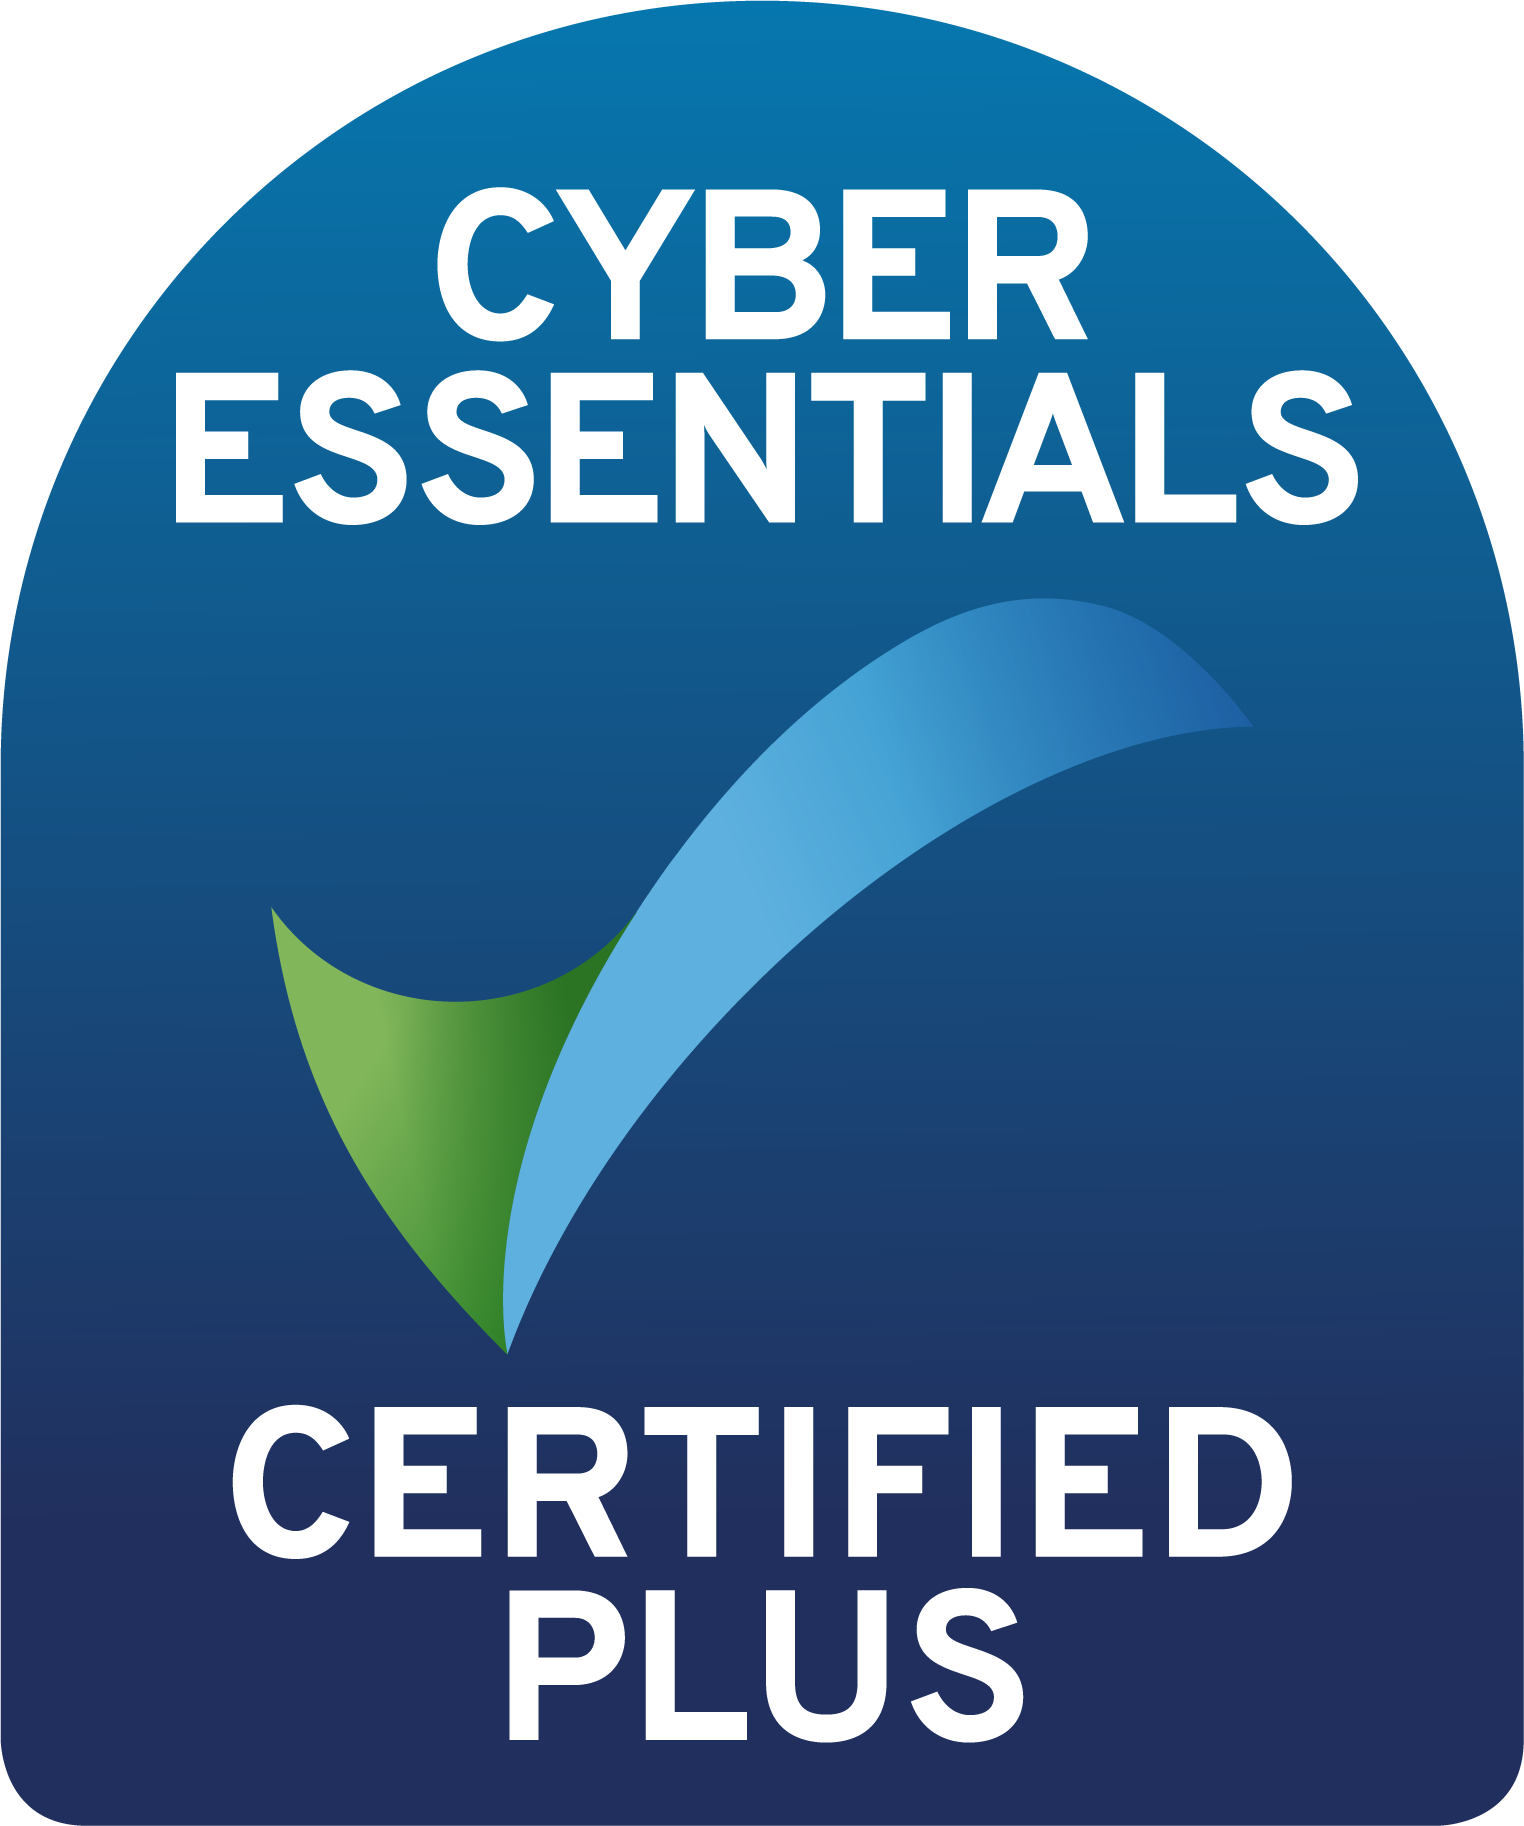 Cyberessentials Certification Mark Plus